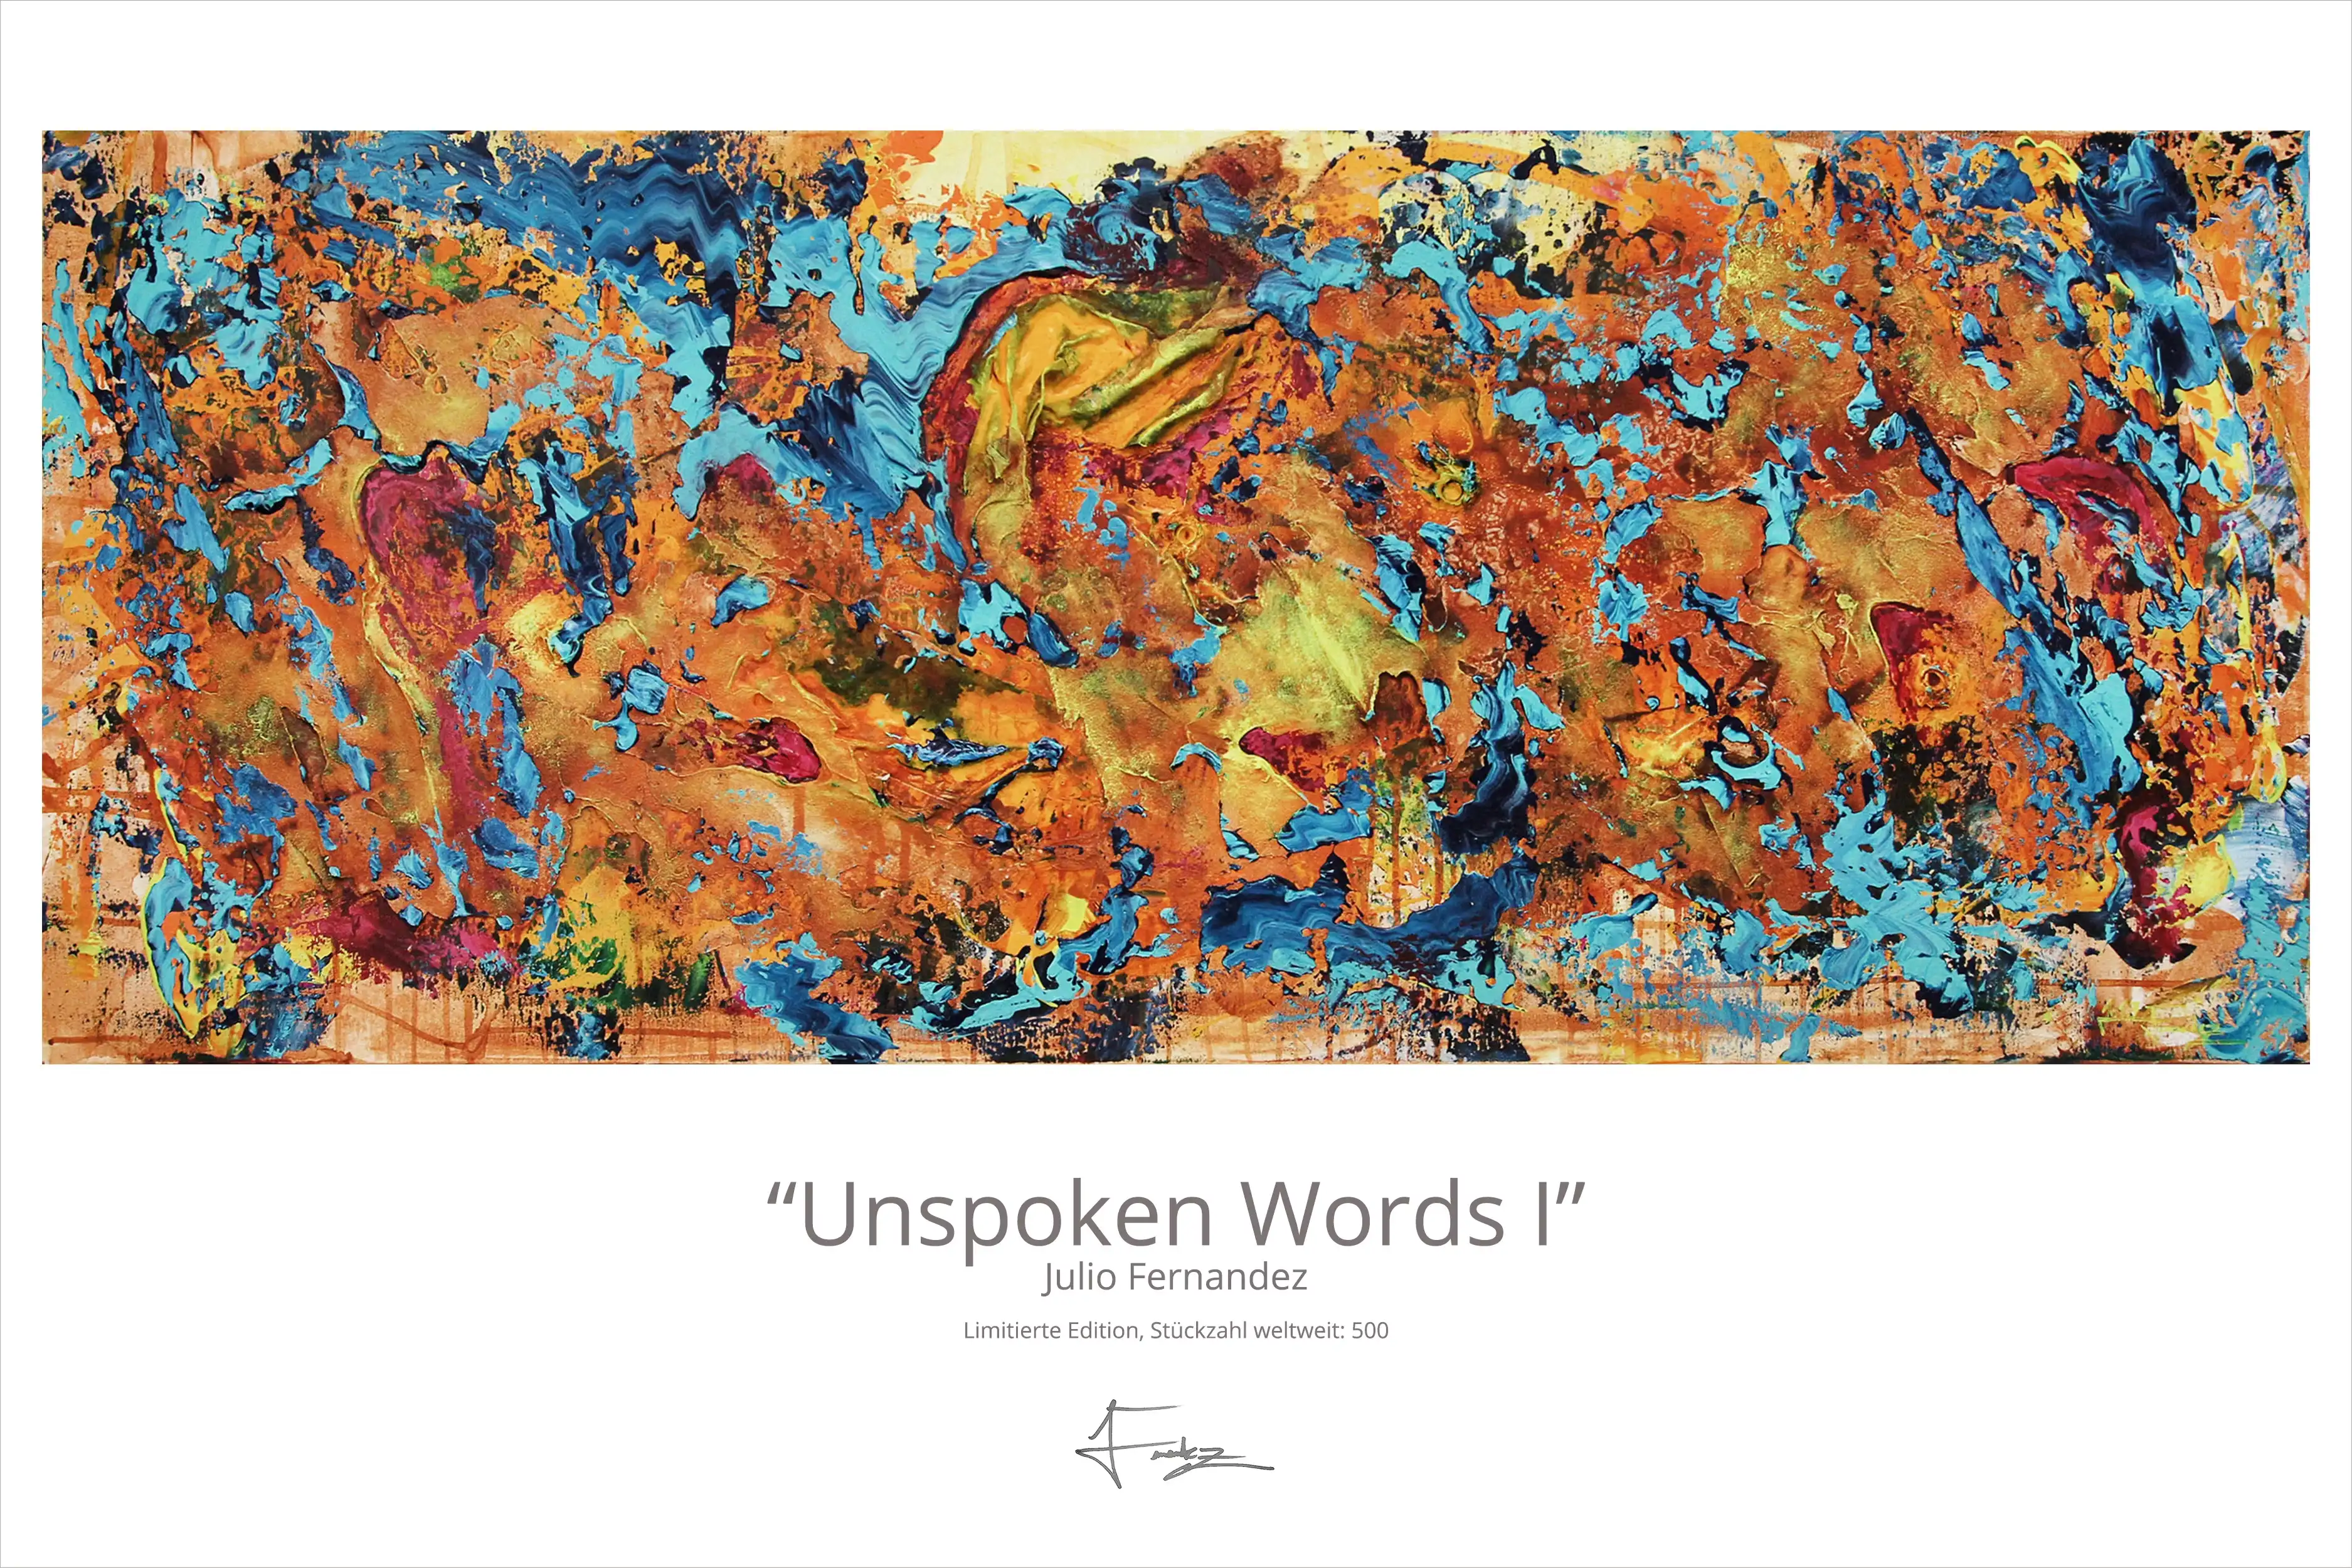 Limitierte Edition auf Papier, J. Fernandez "Unspoken Words I", Fineartprint, Kollektion E&K